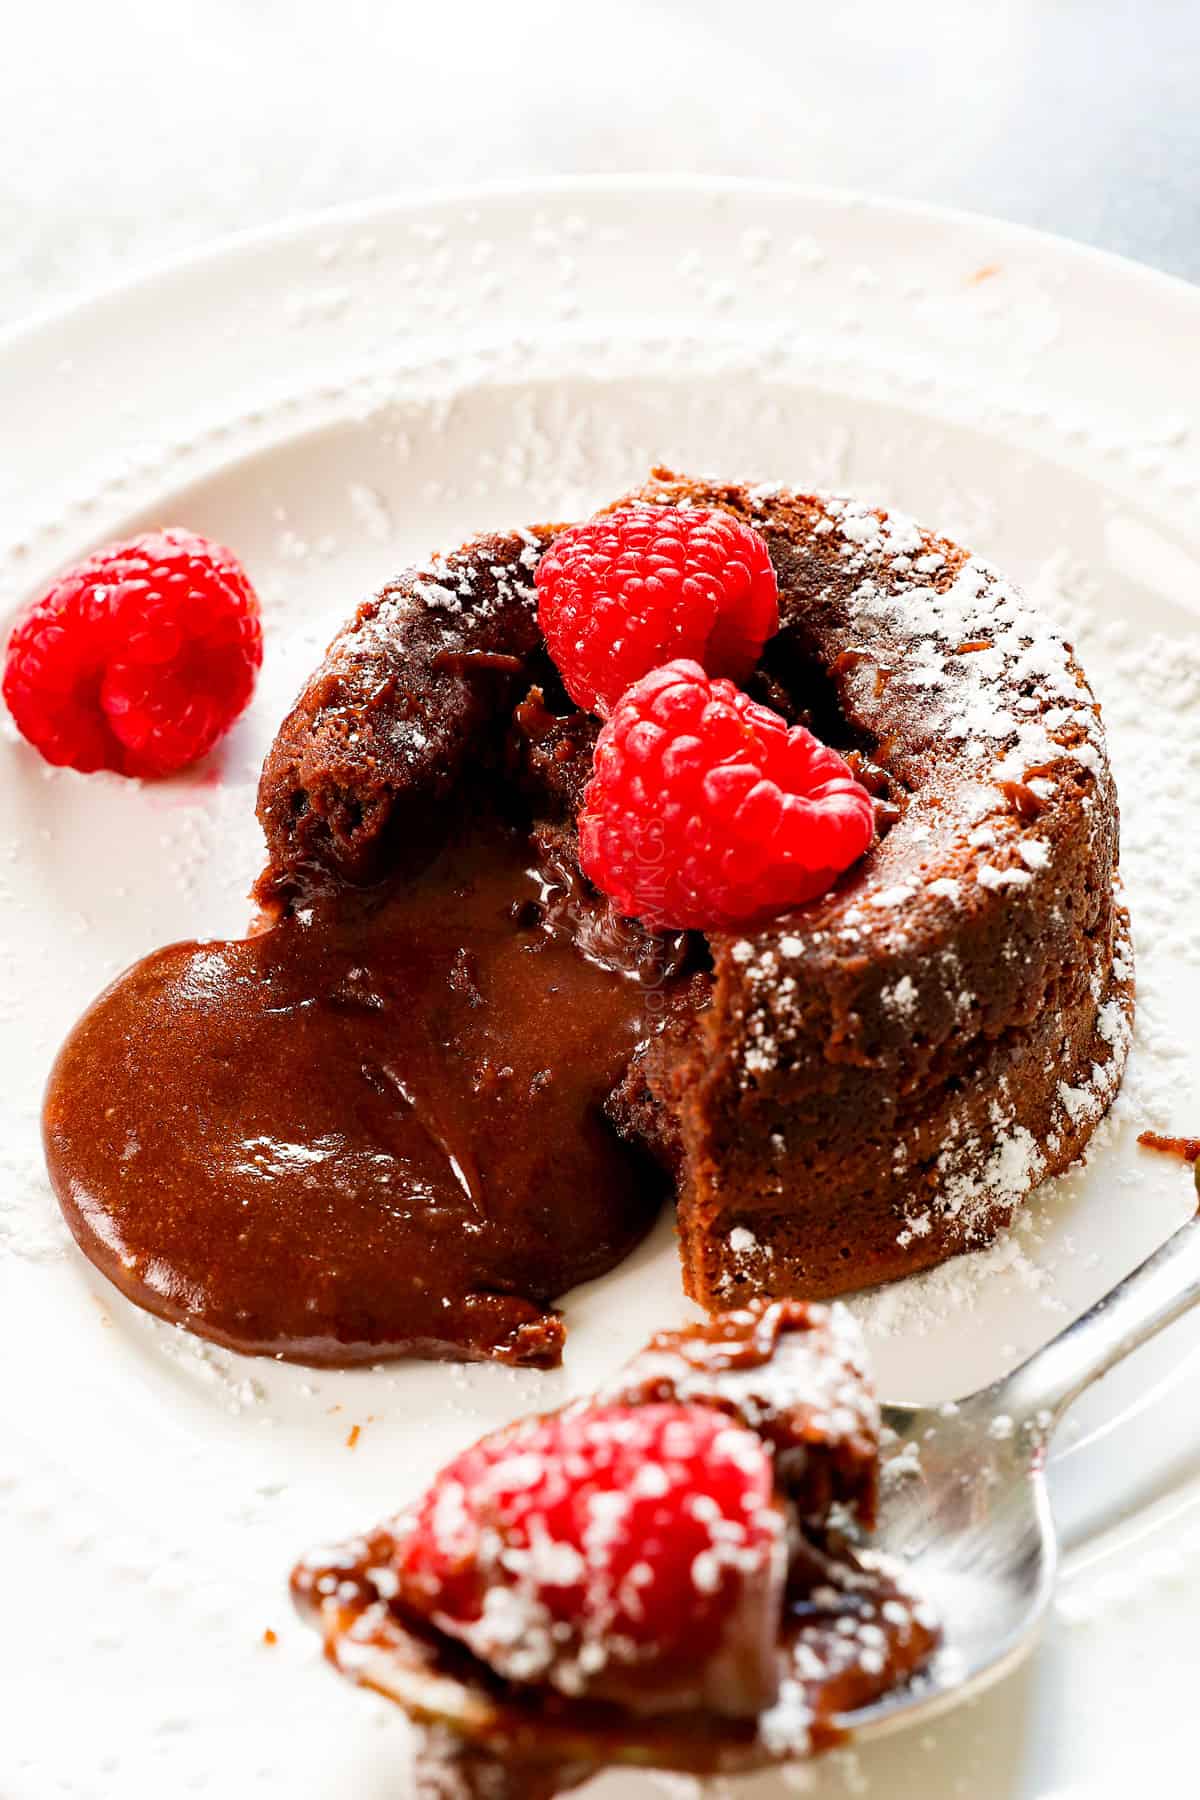 Molten chocolate cake - Wikipedia